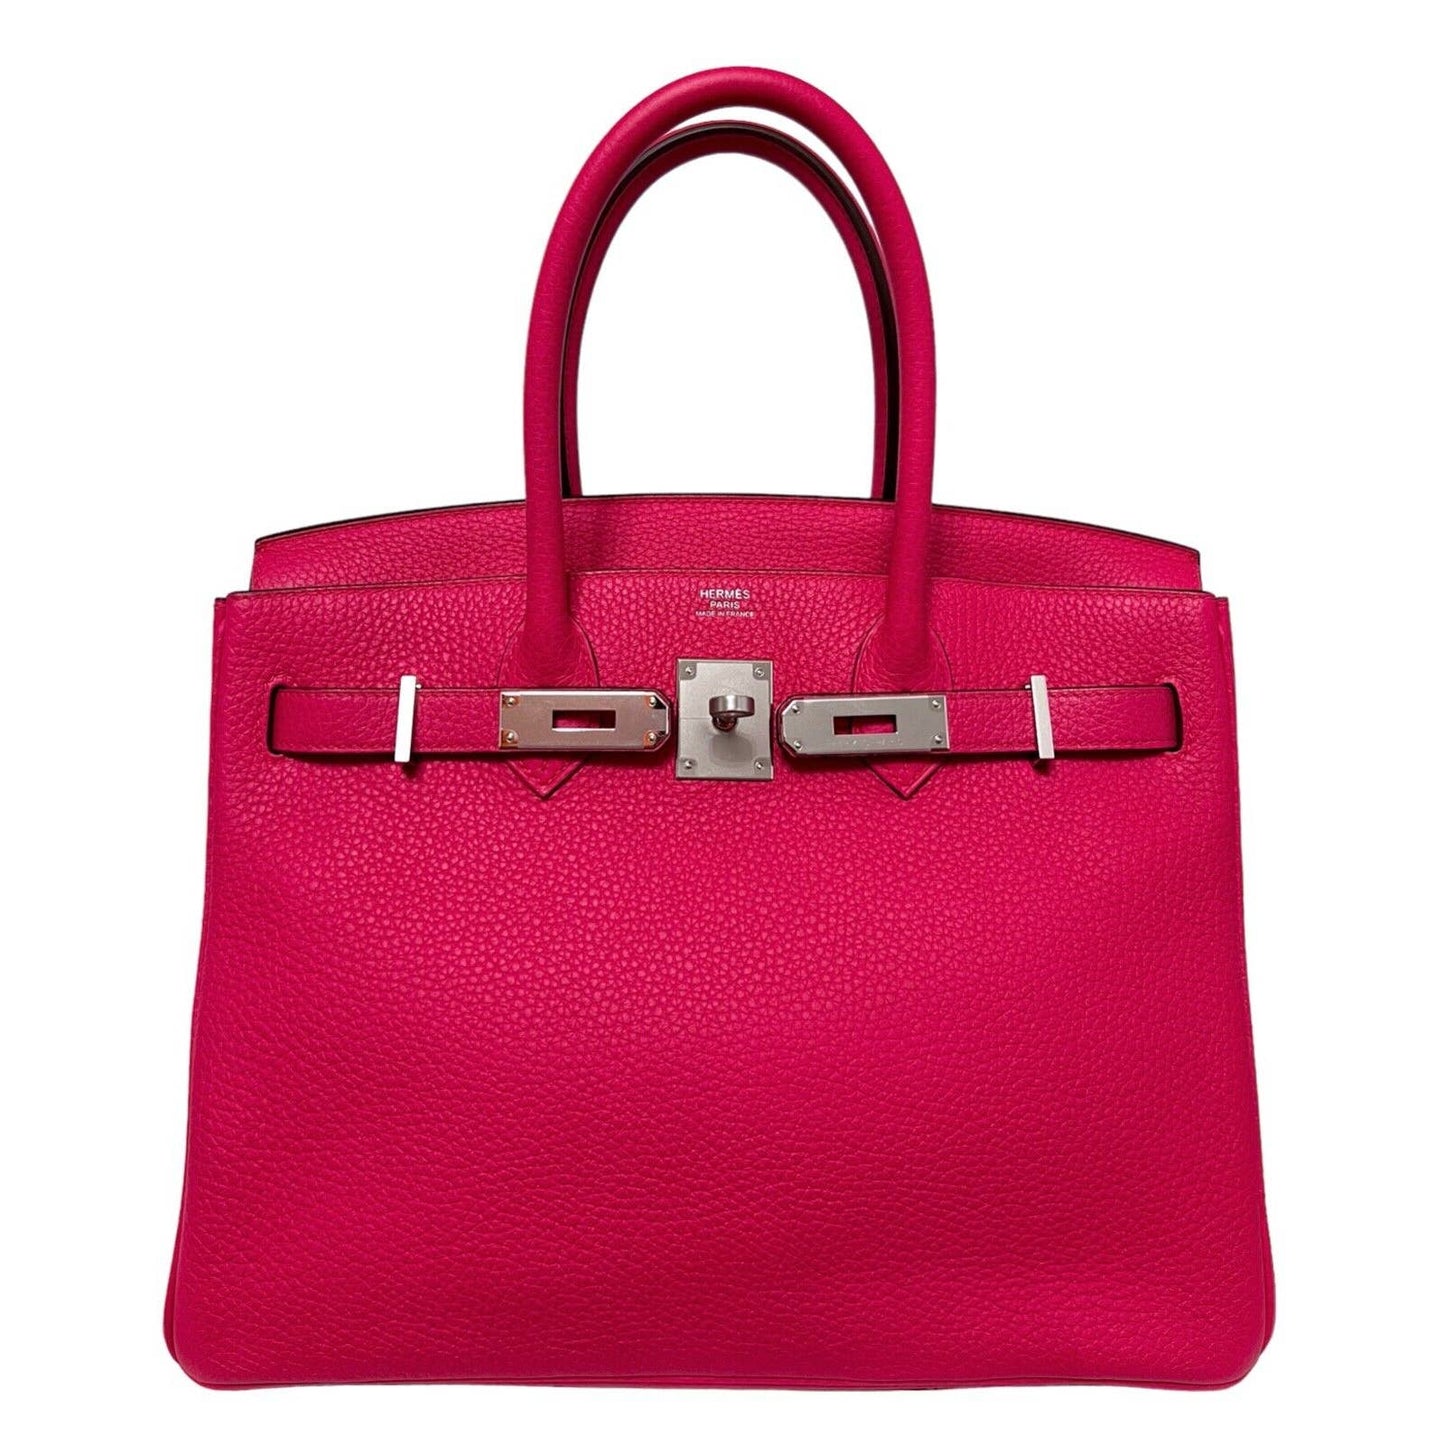 Hermes Pink Epsom Leather Palladium Hardware Birkin 30 Bag Hermes